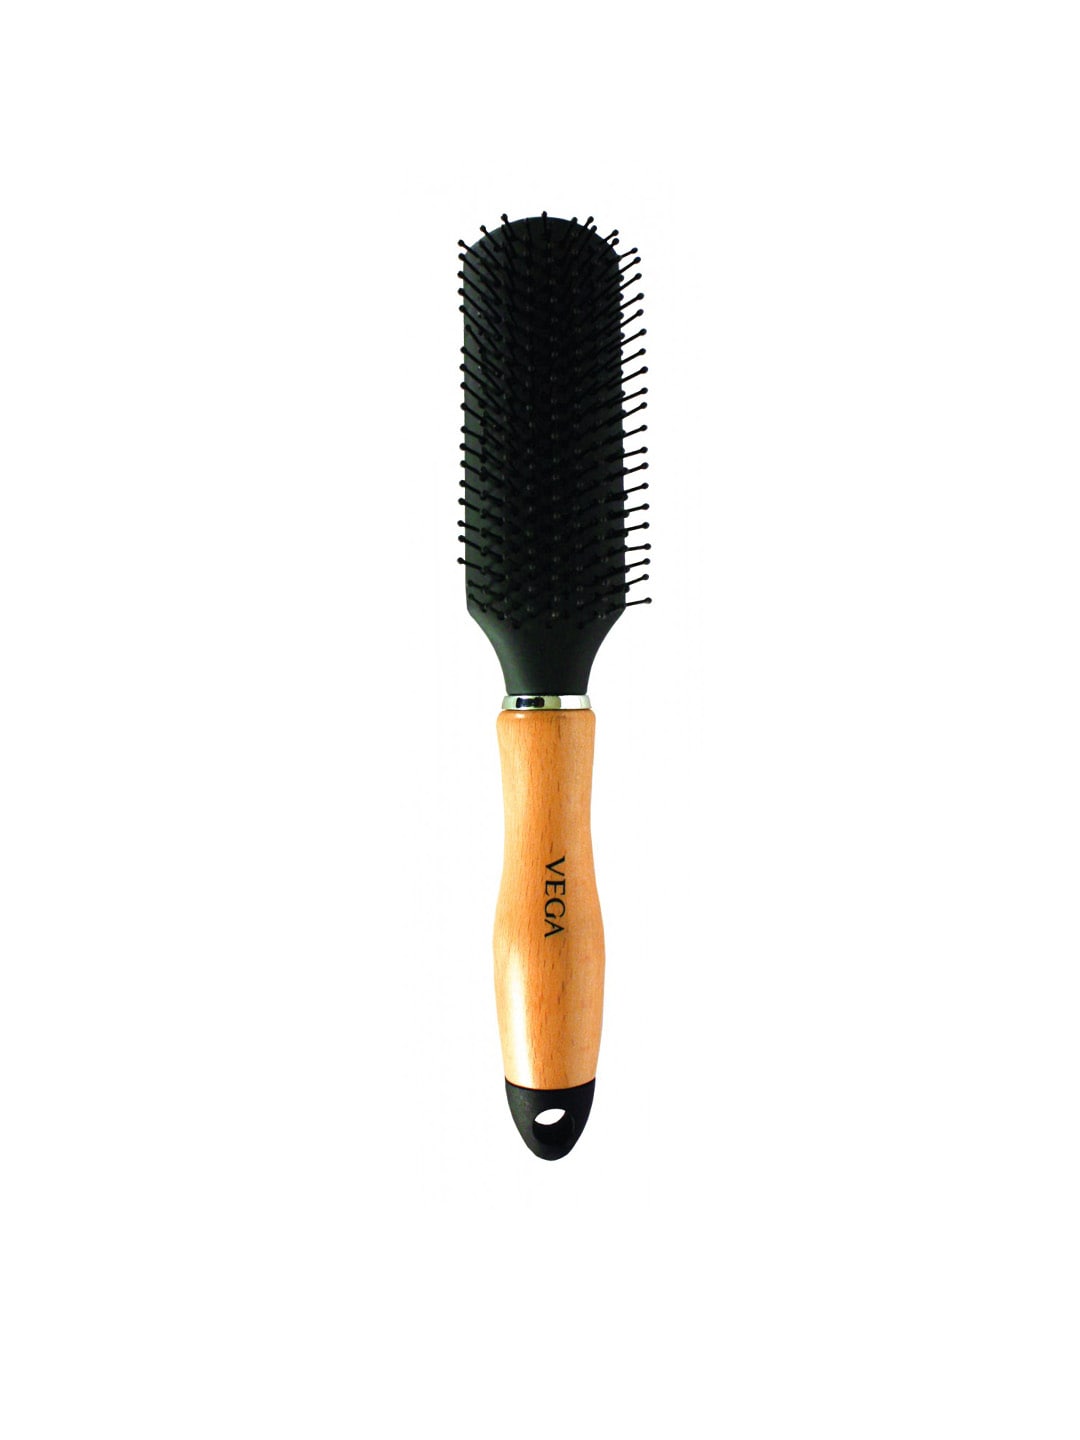 VEGA Unisex Black & Beige Cushioned Paddle Hair Brush Price in India